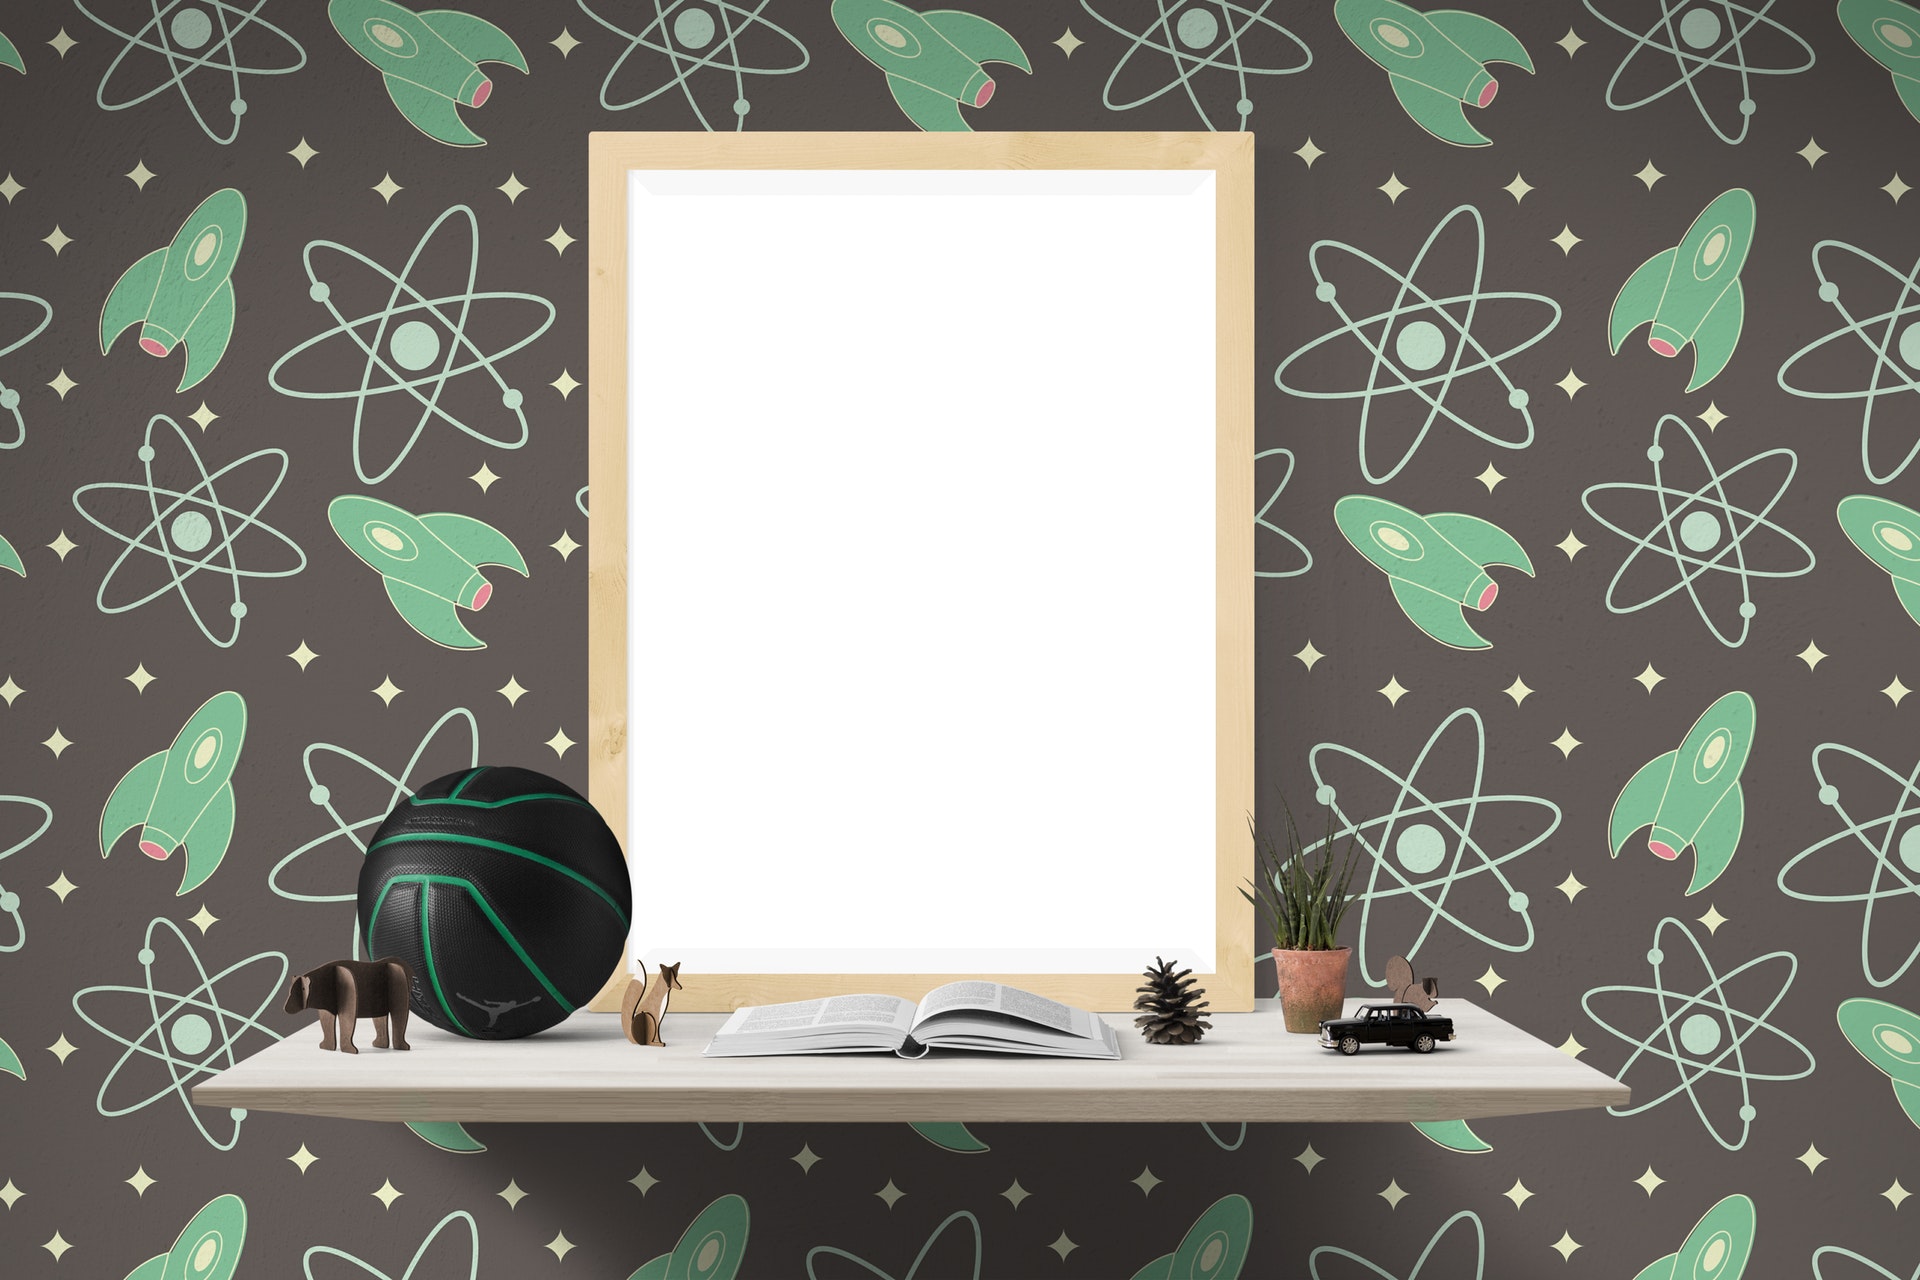 motif wallpaper dinding kamar anak,green,wallpaper,leaf,room,blackboard